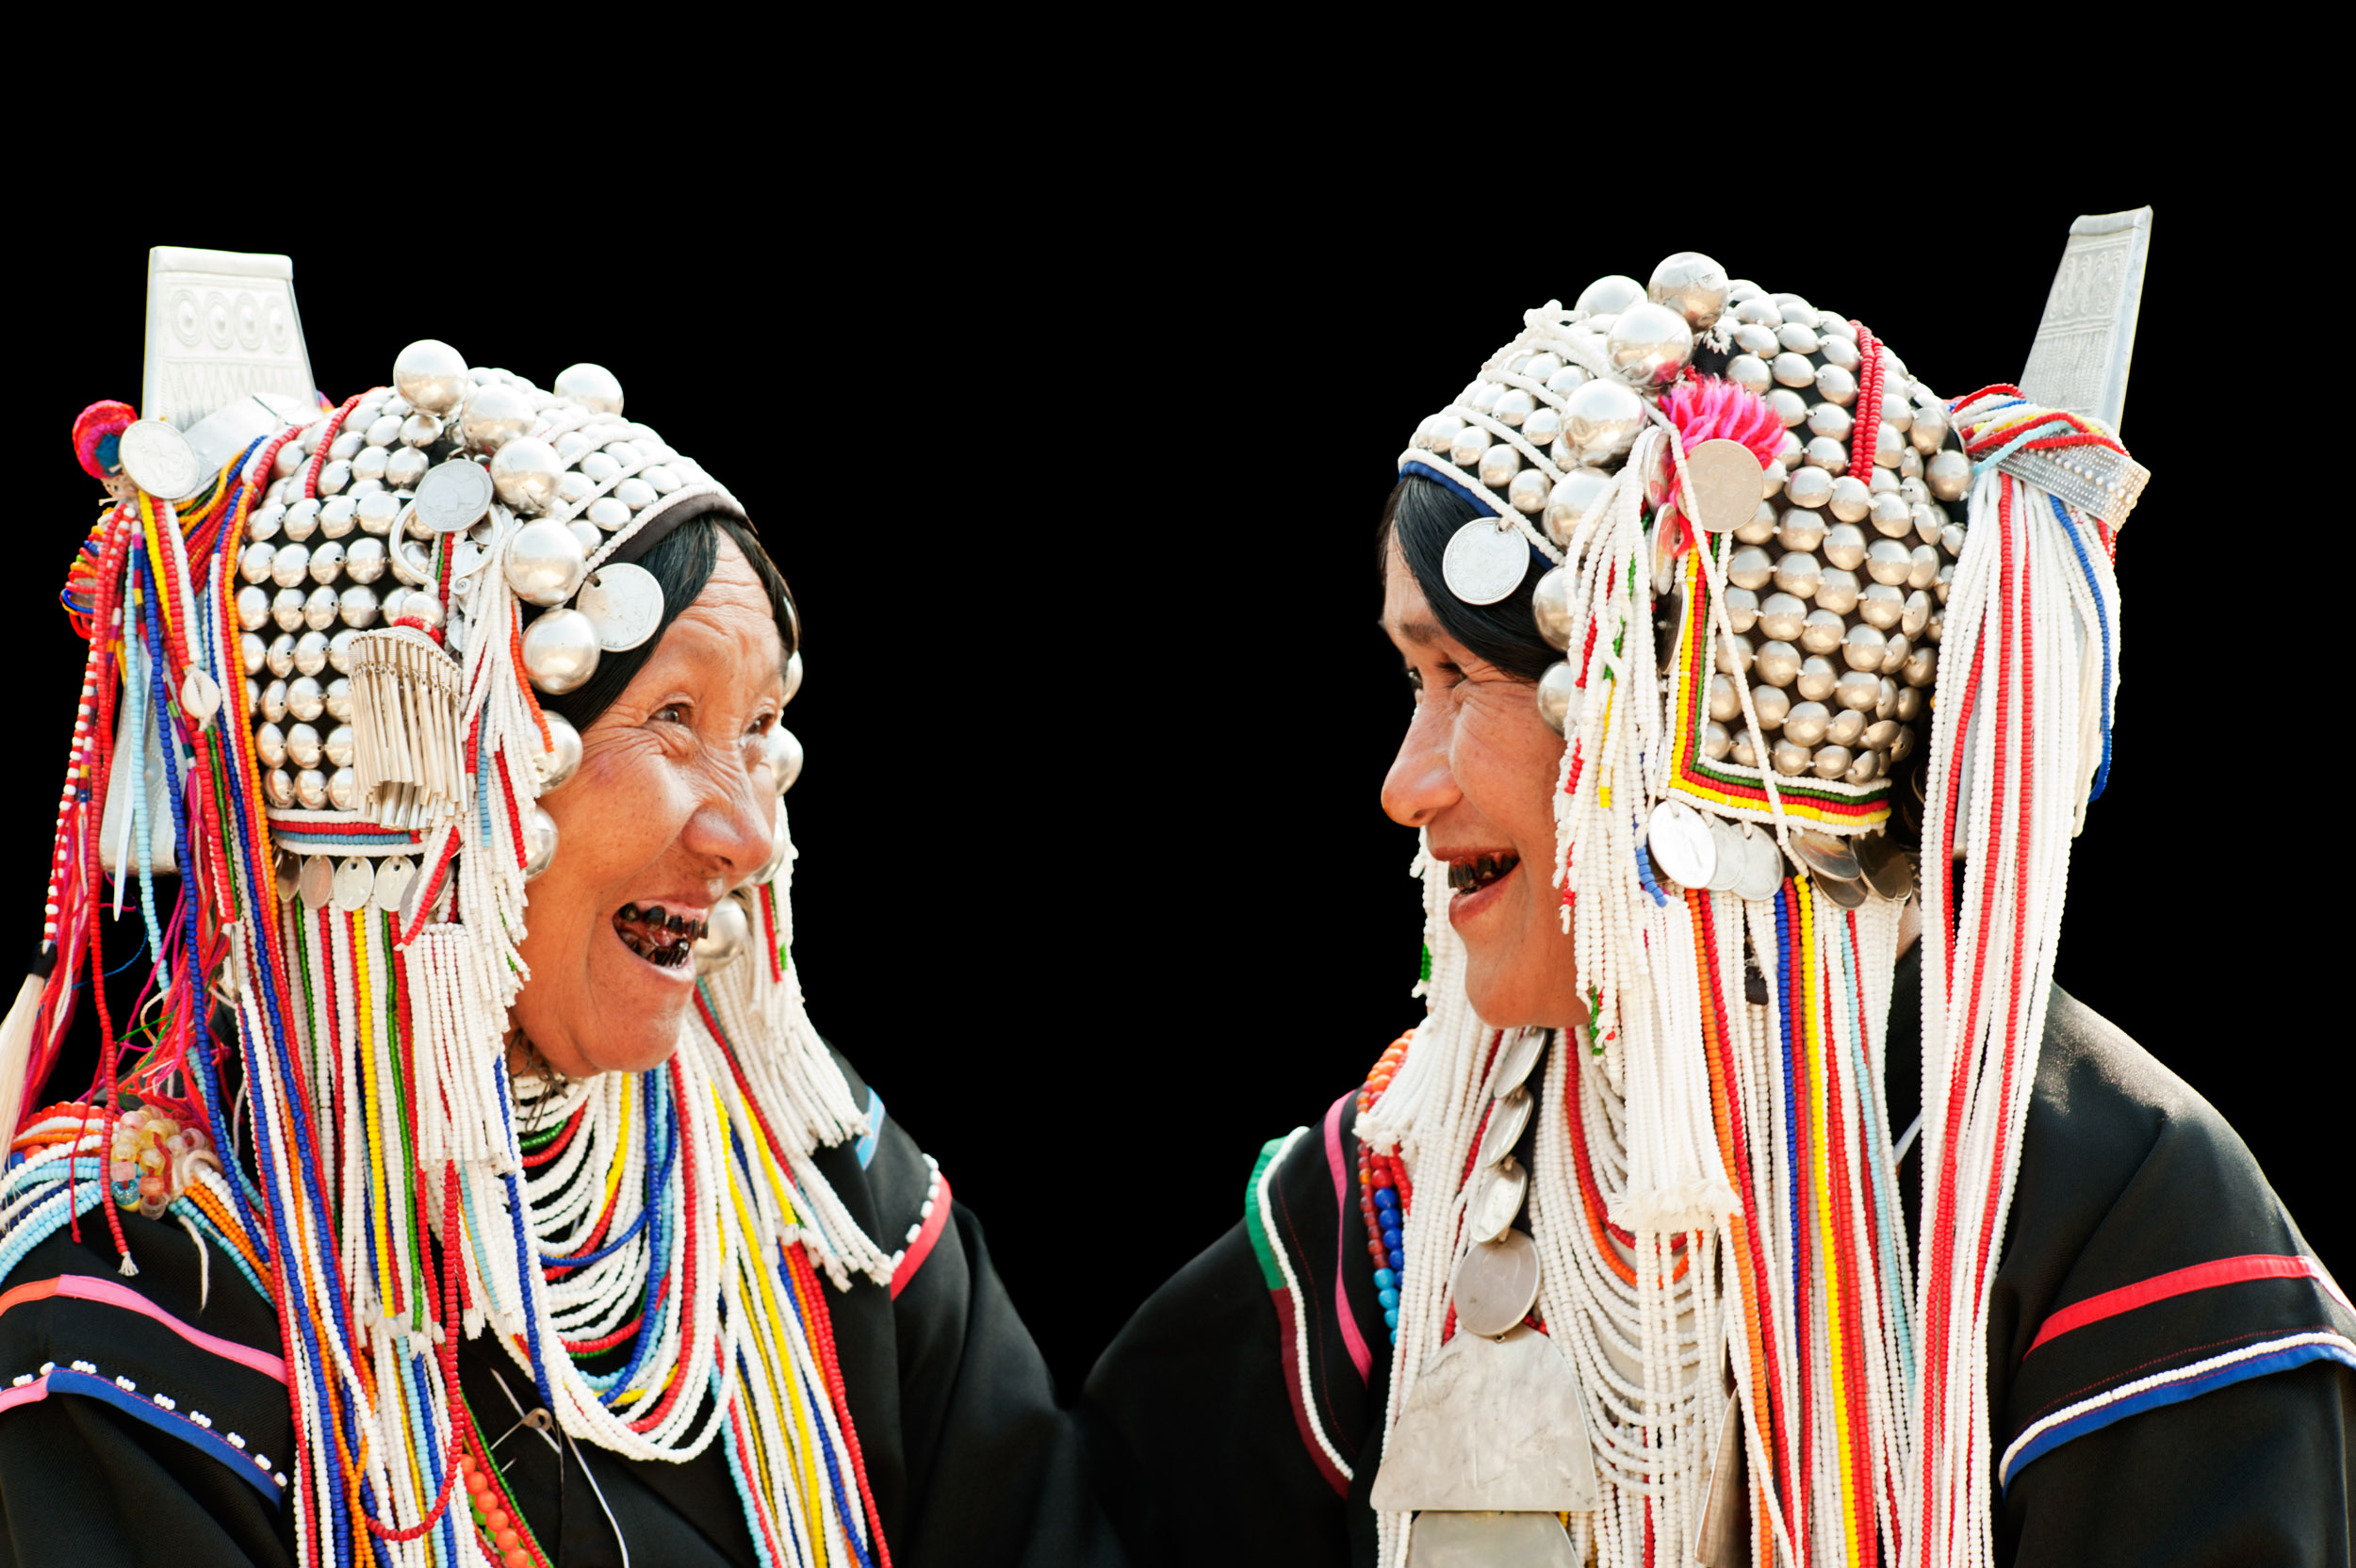 Two Akha woman having a laugh portrait photography idea